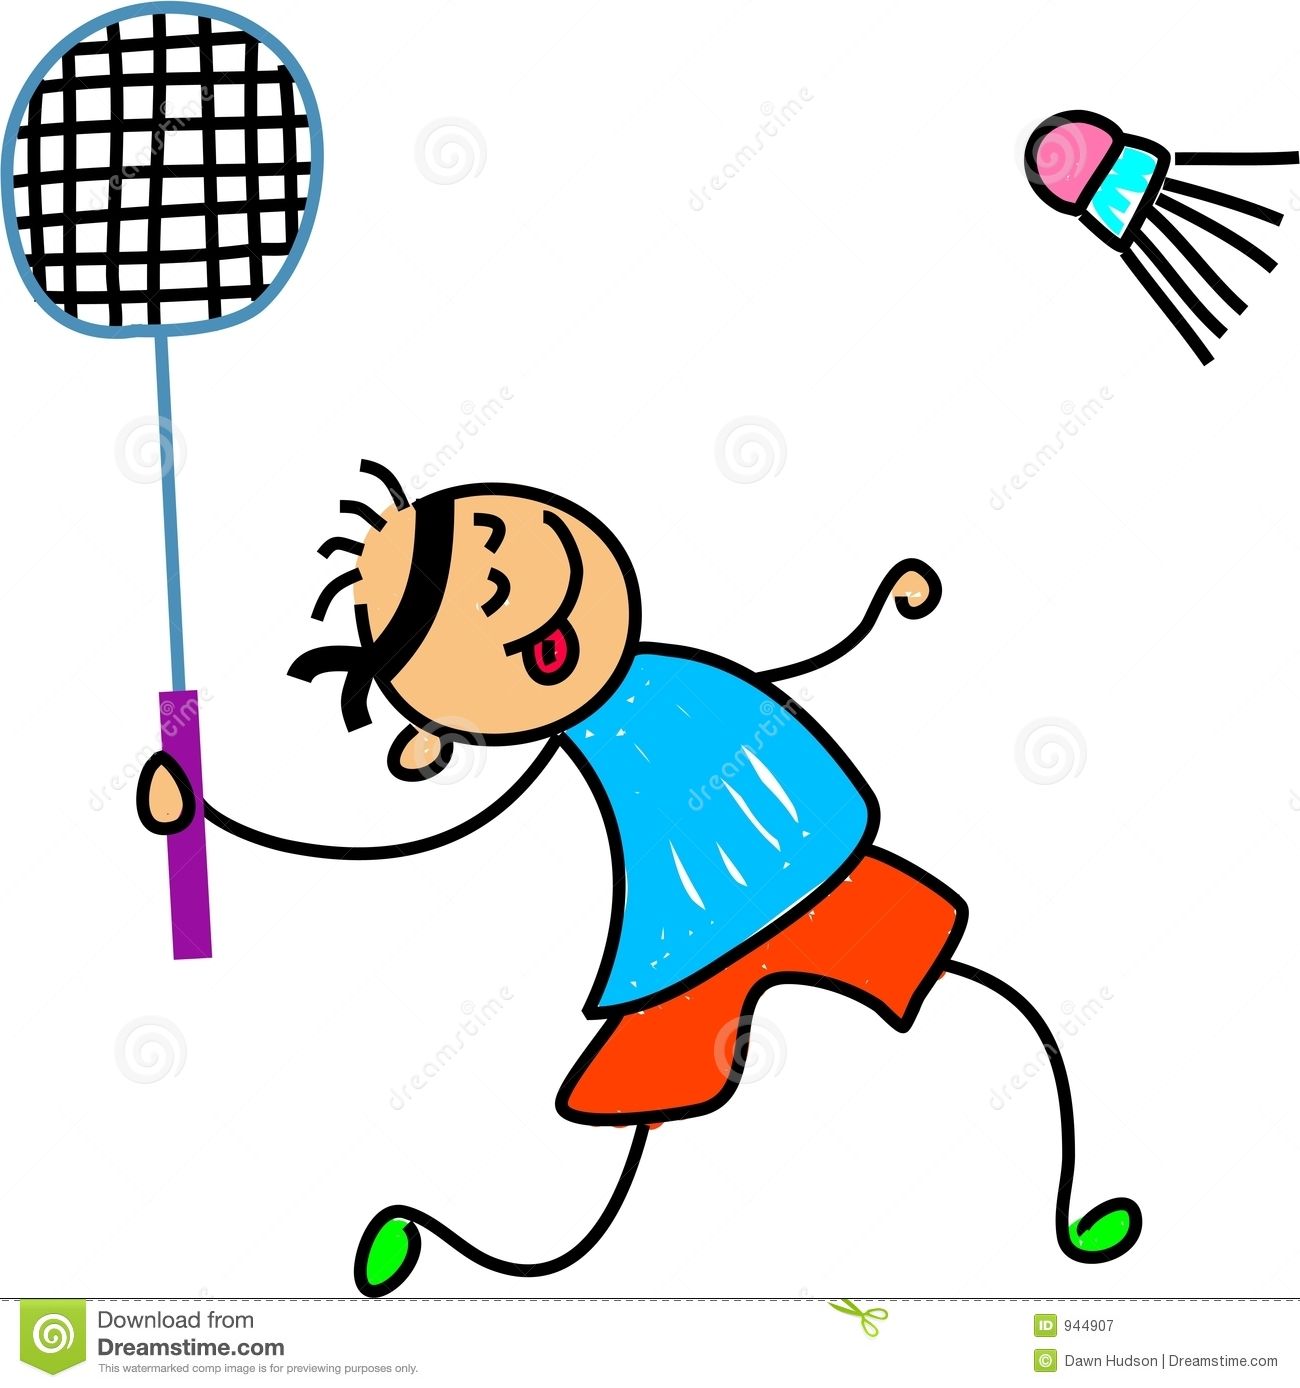 Badminton badminton match